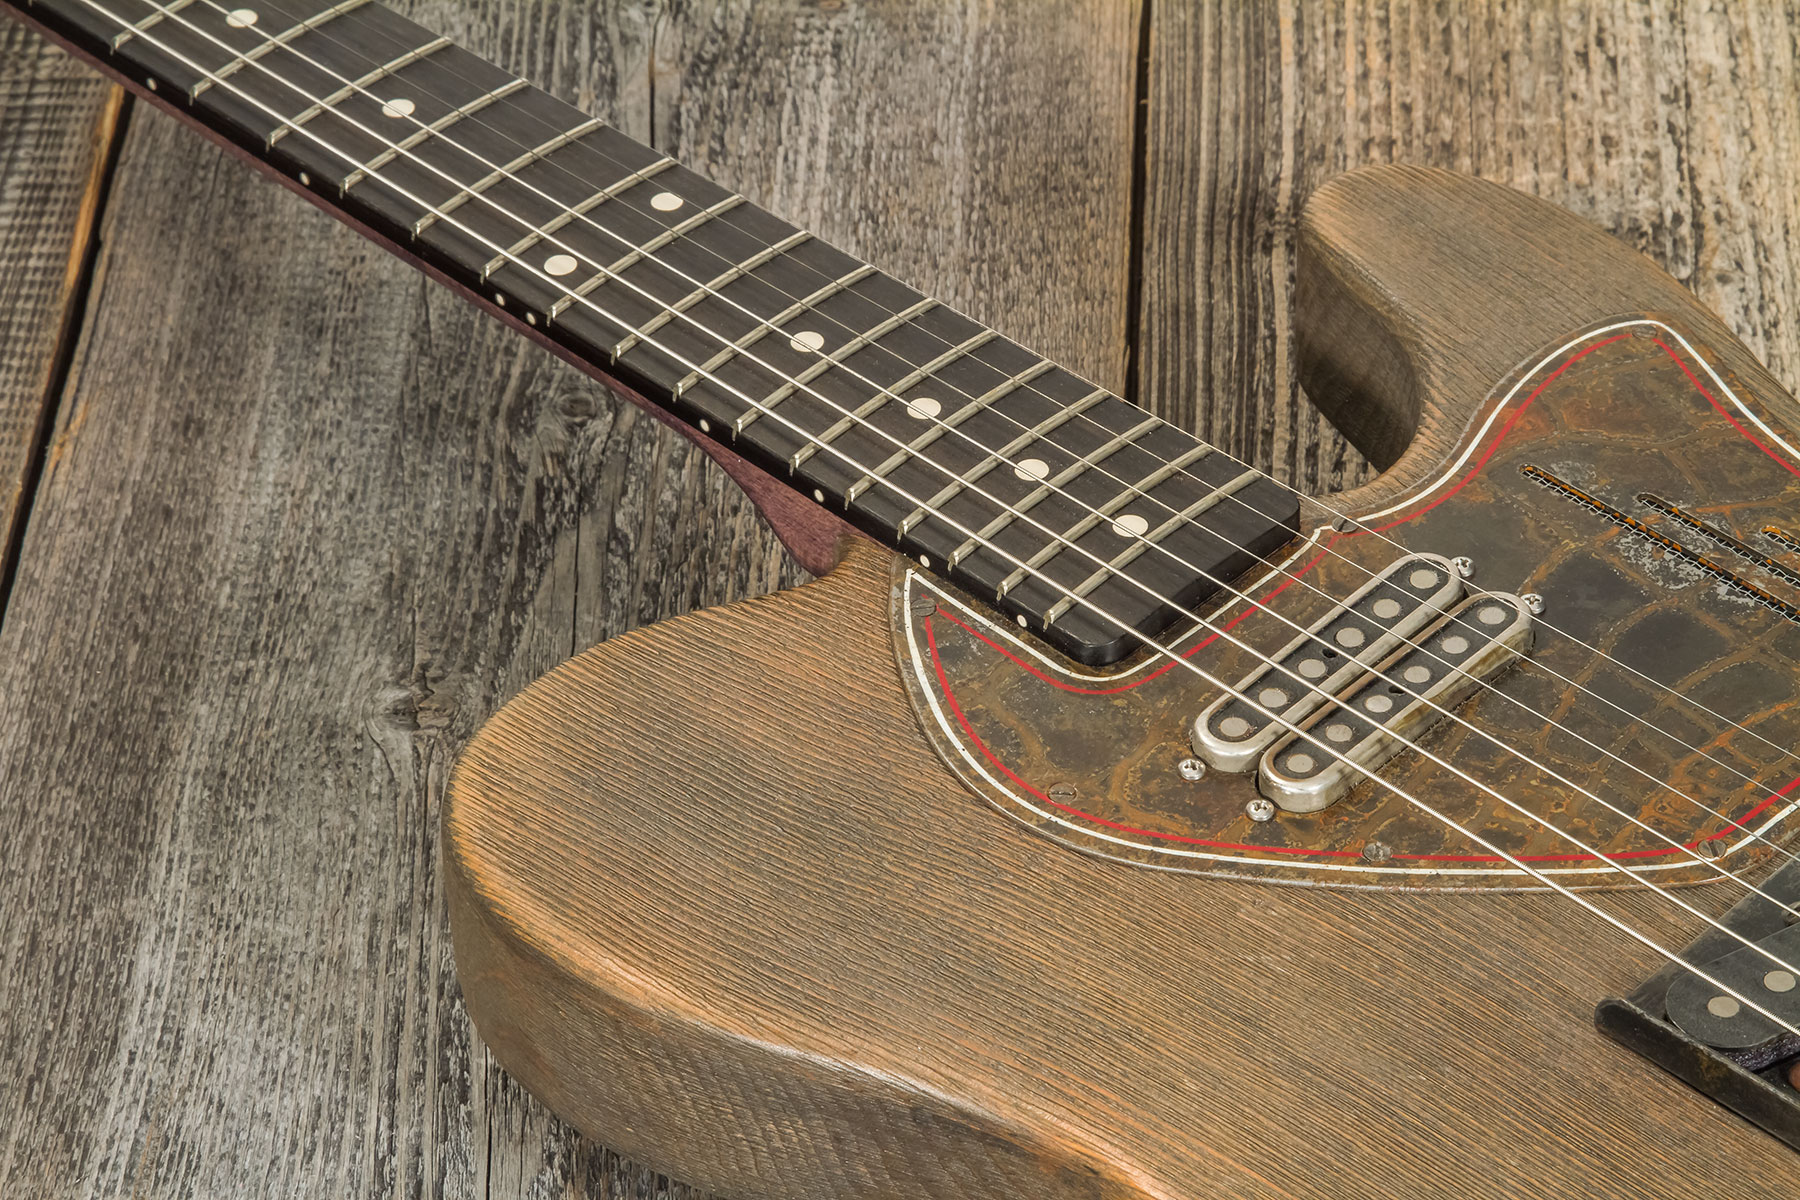 James Trussart Steelguard Caster Sugar Pine Sh Eb #18035 - Rust O Matic Gator Grey Driftwood - Tel shape electric guitar - Variation 3